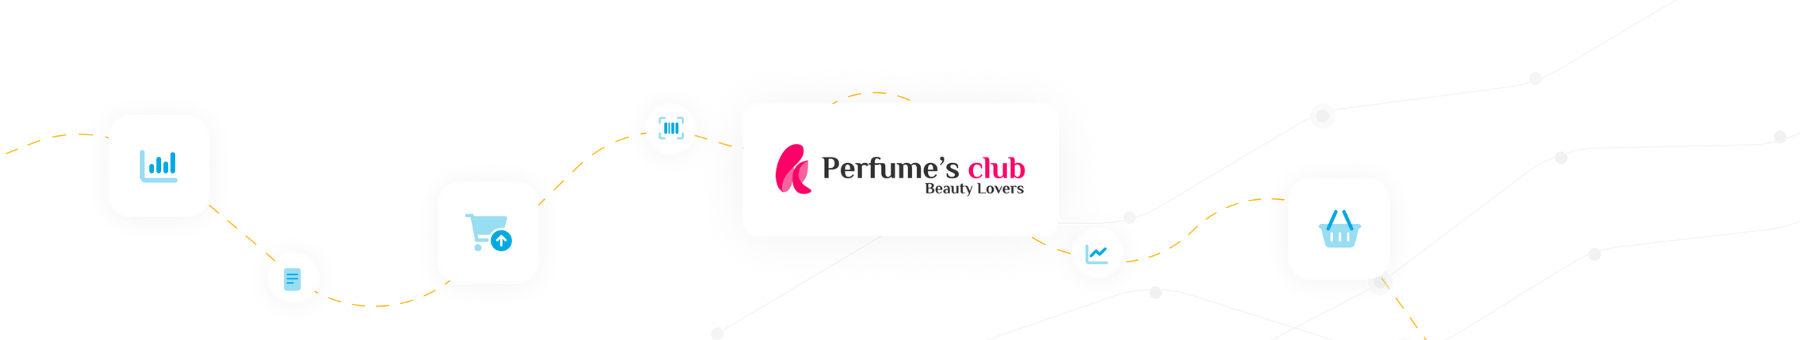 Case Study Perfume's club